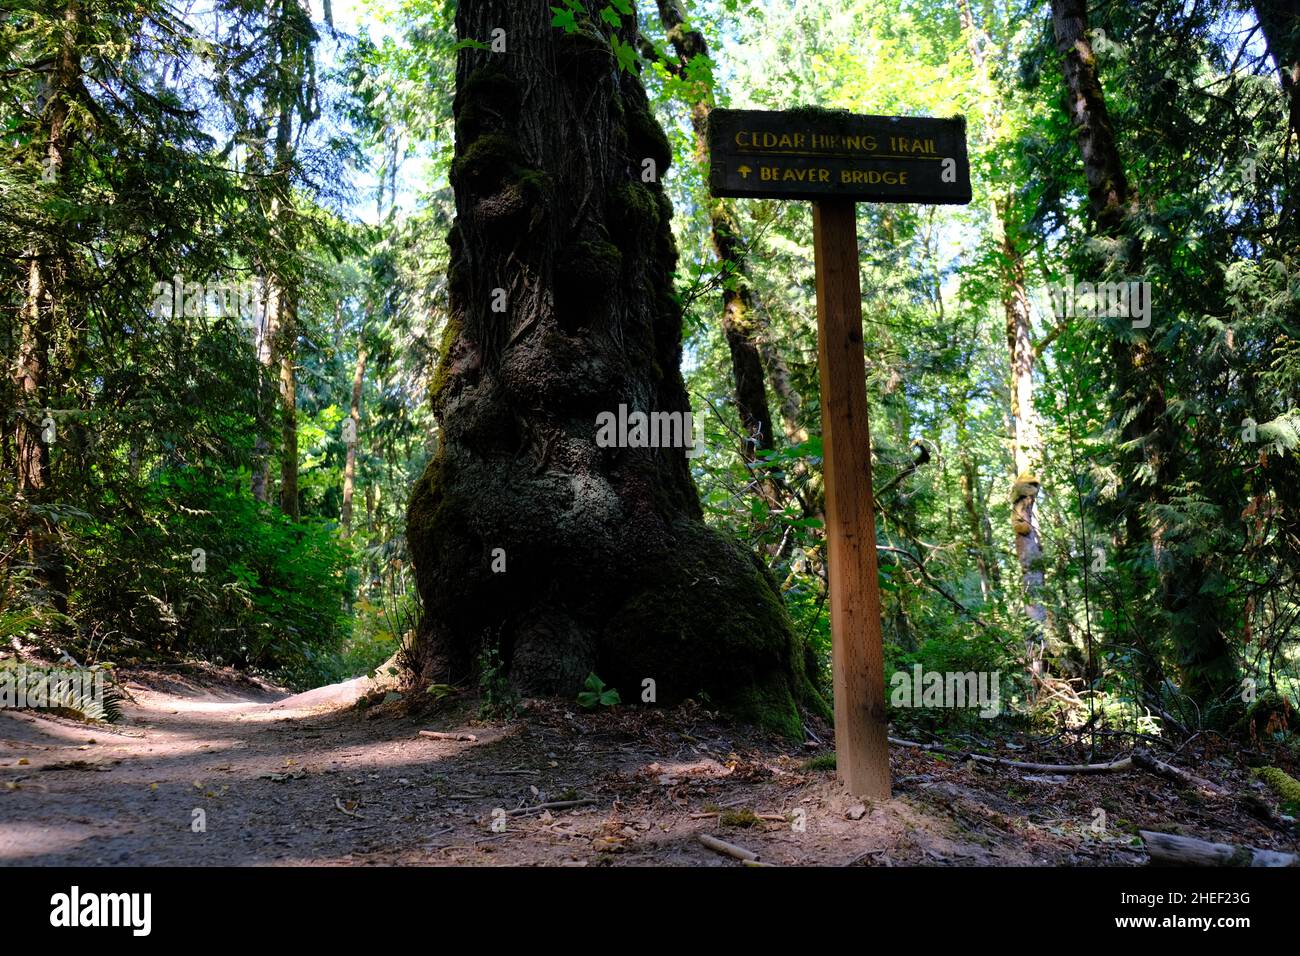 Cedar Hiking Trail - Tryon Creek State Natural Area Stockfoto